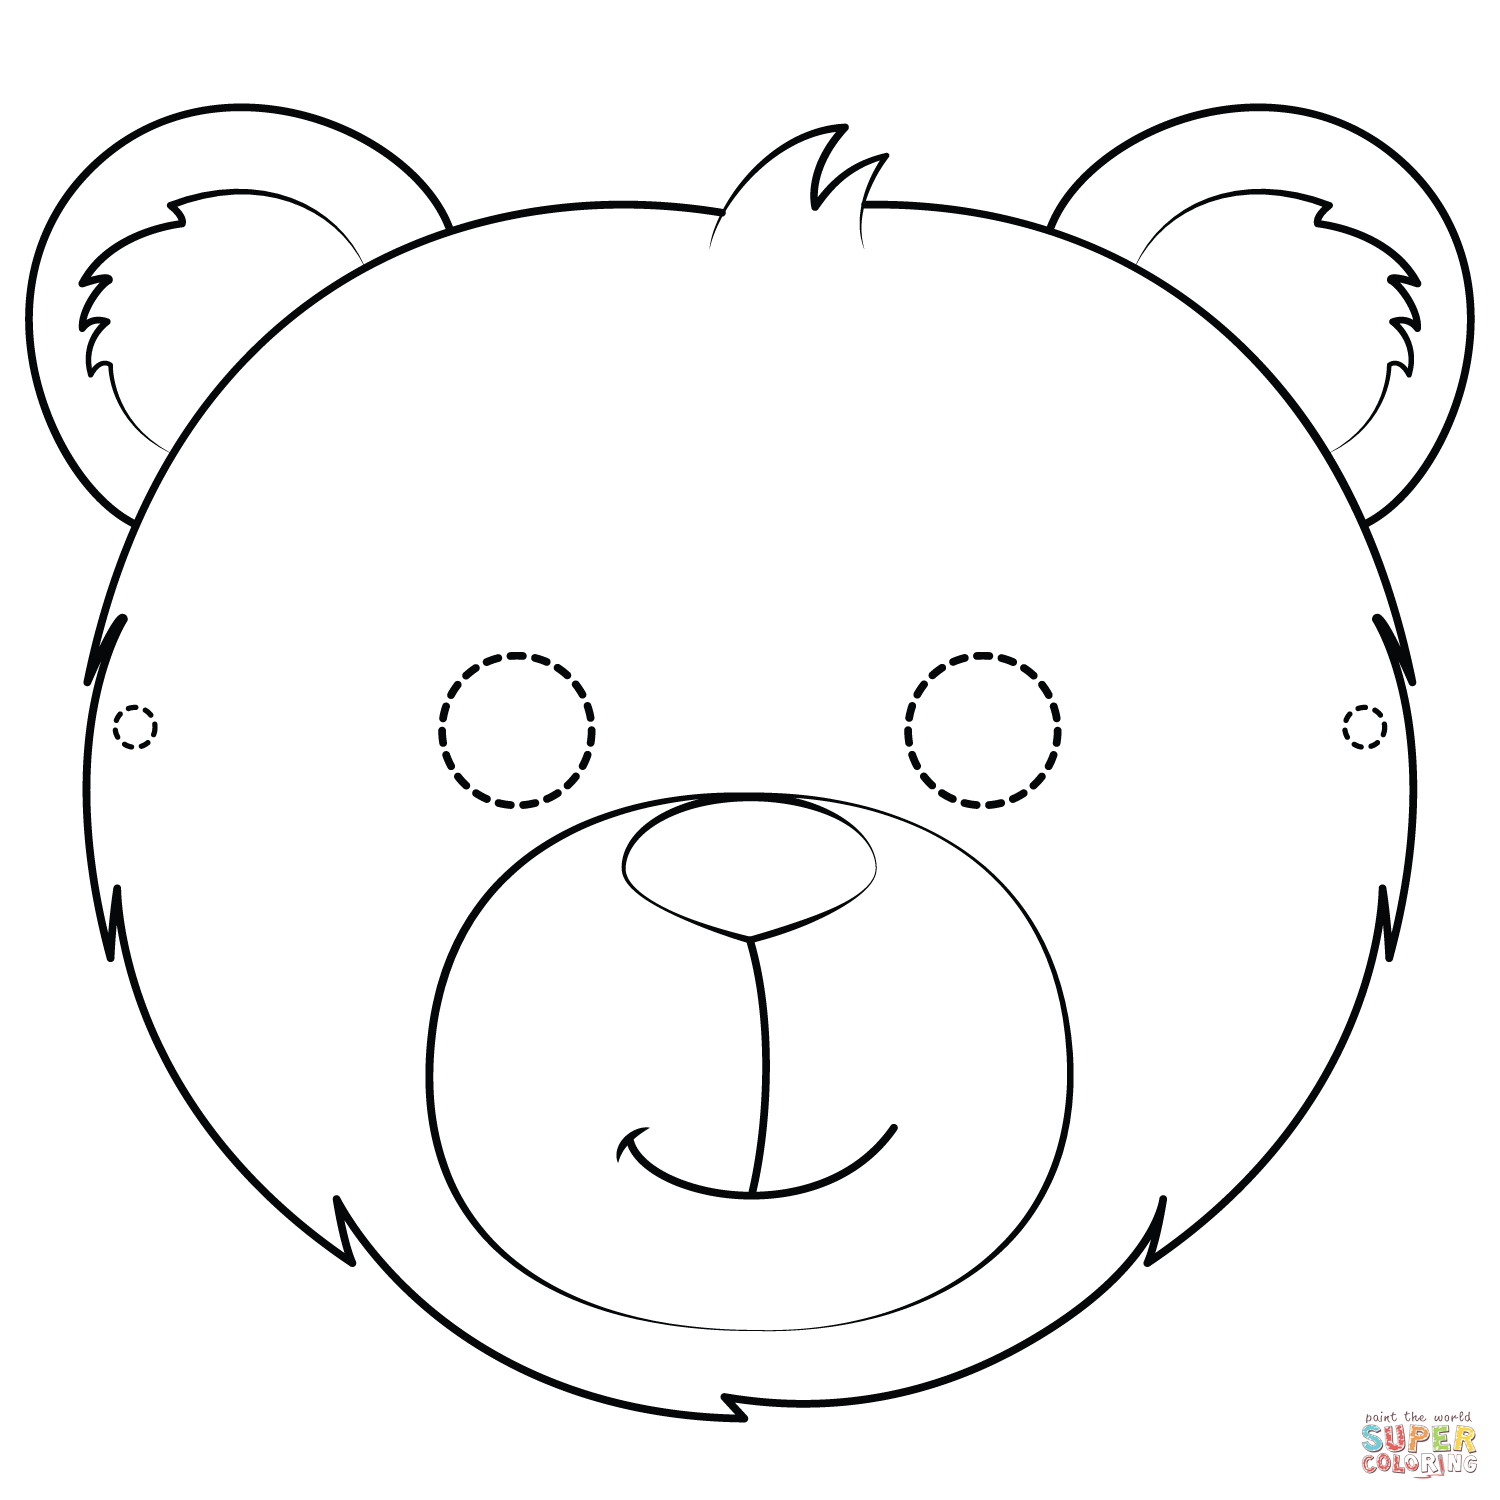 Bear Mask Coloring Page | Free Printable Coloring Pages - Free Printable Bear Mask